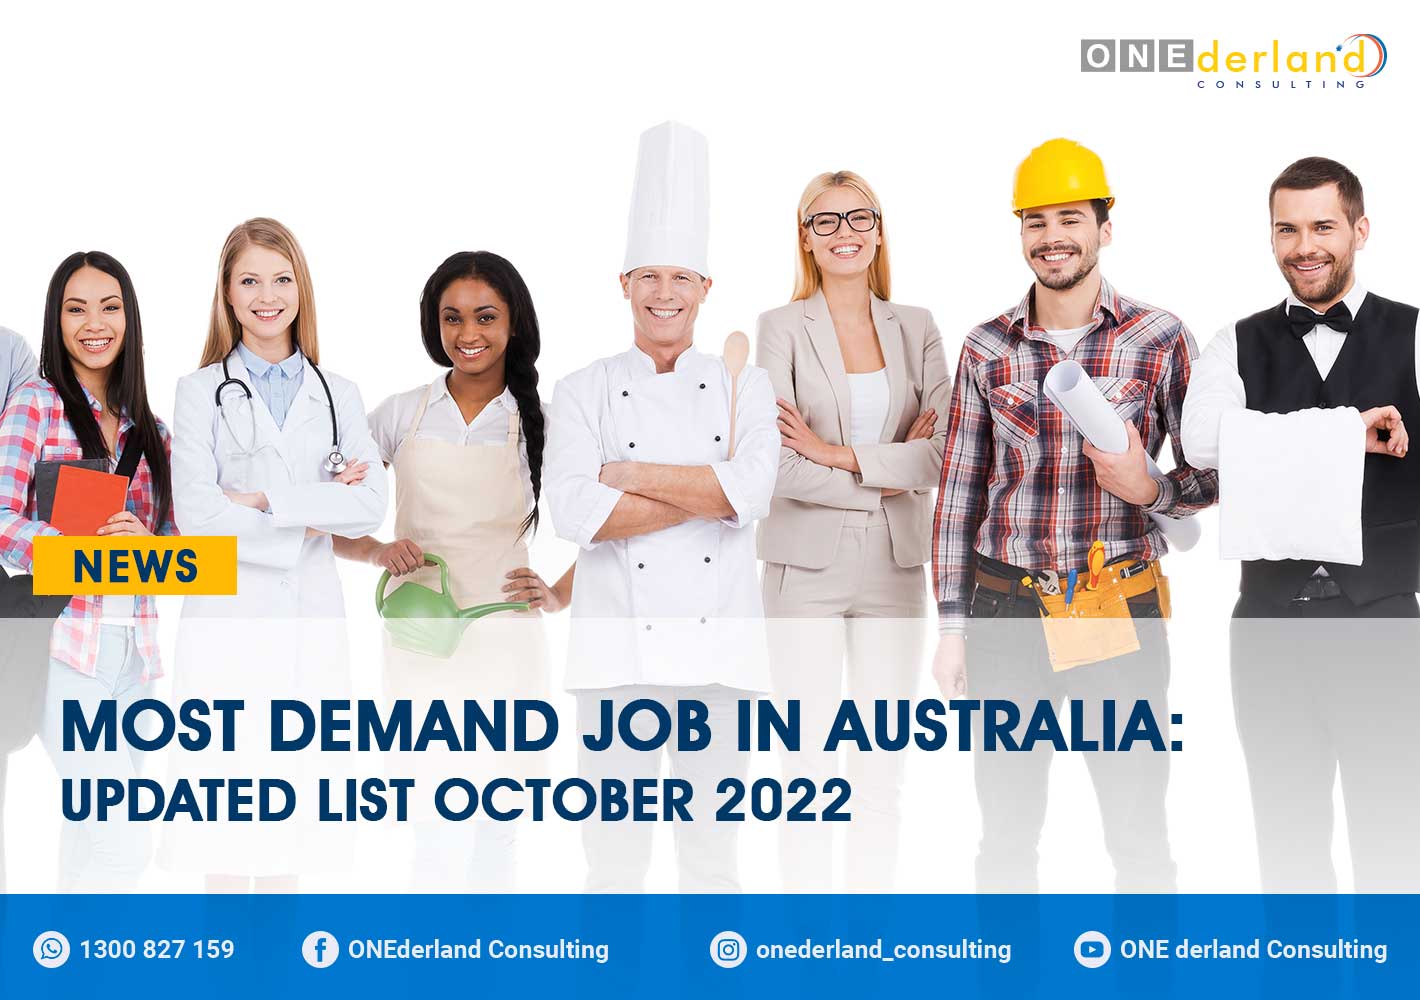 Most Demand Job in Australia: Registered Nurse on First Ranking